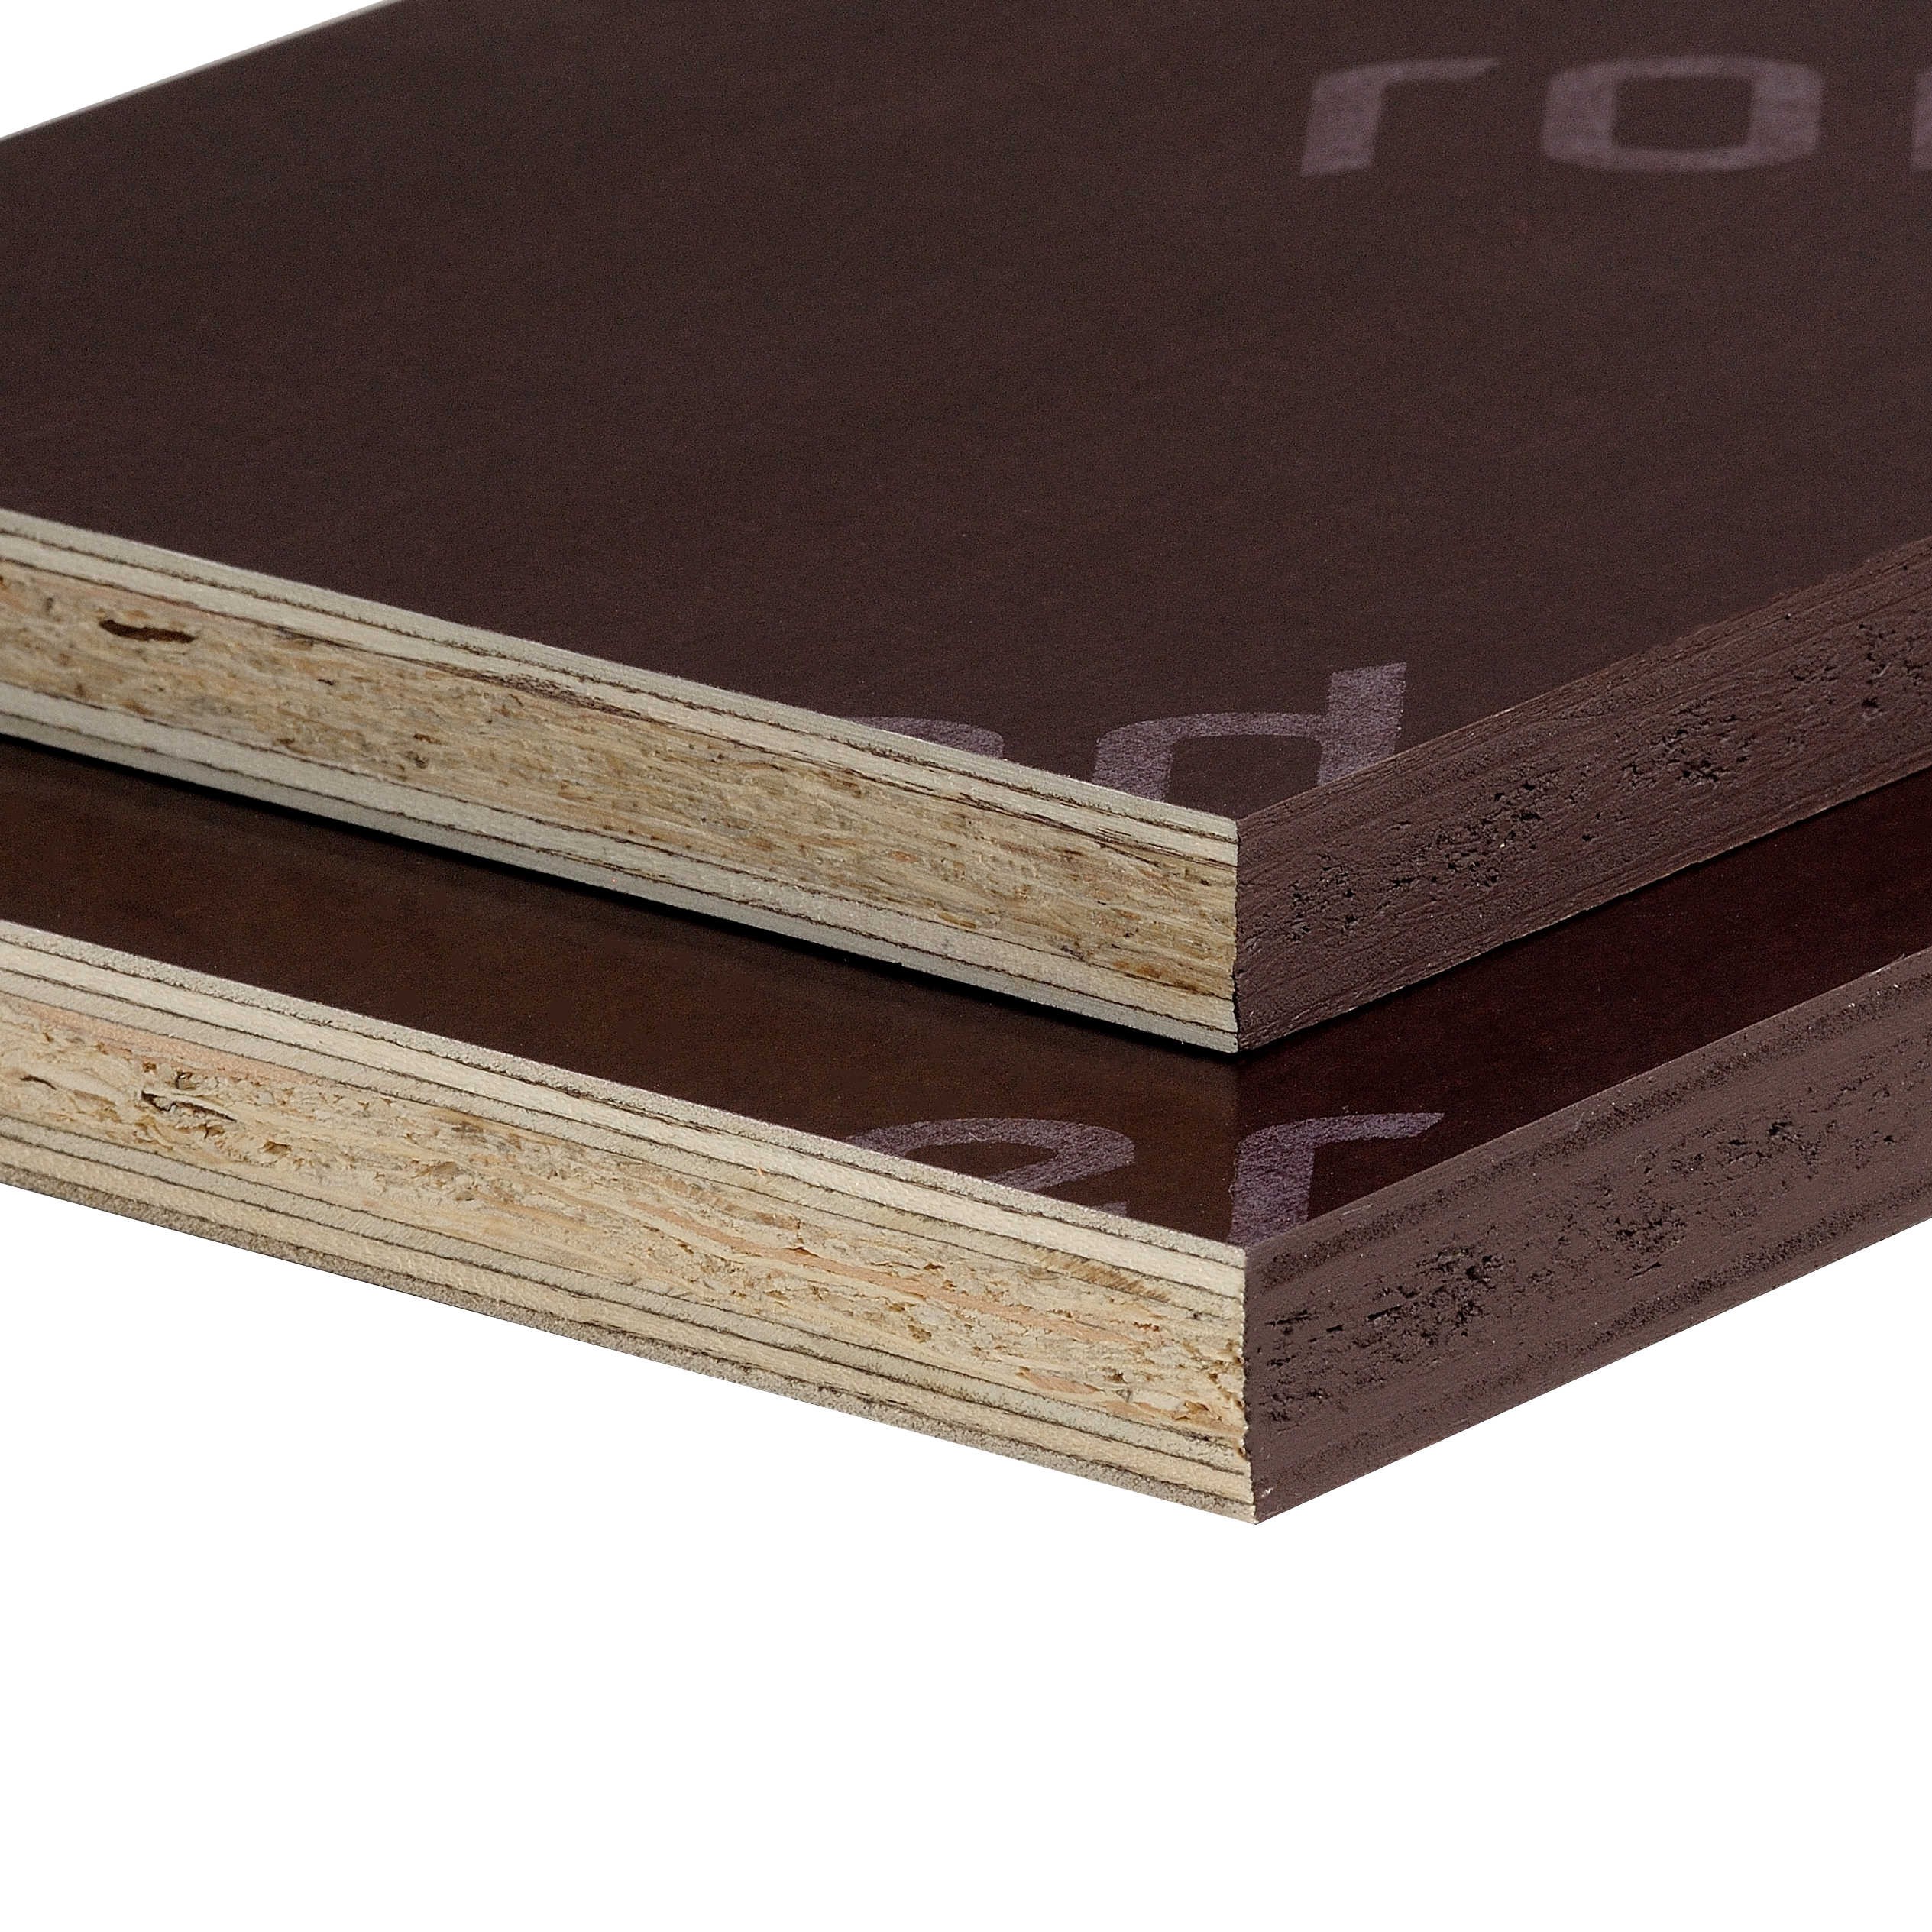 Plywood - TEGO formwork plywood 21 mm thickness, 1220 x 2440 mm class B, https:maxbau.ro